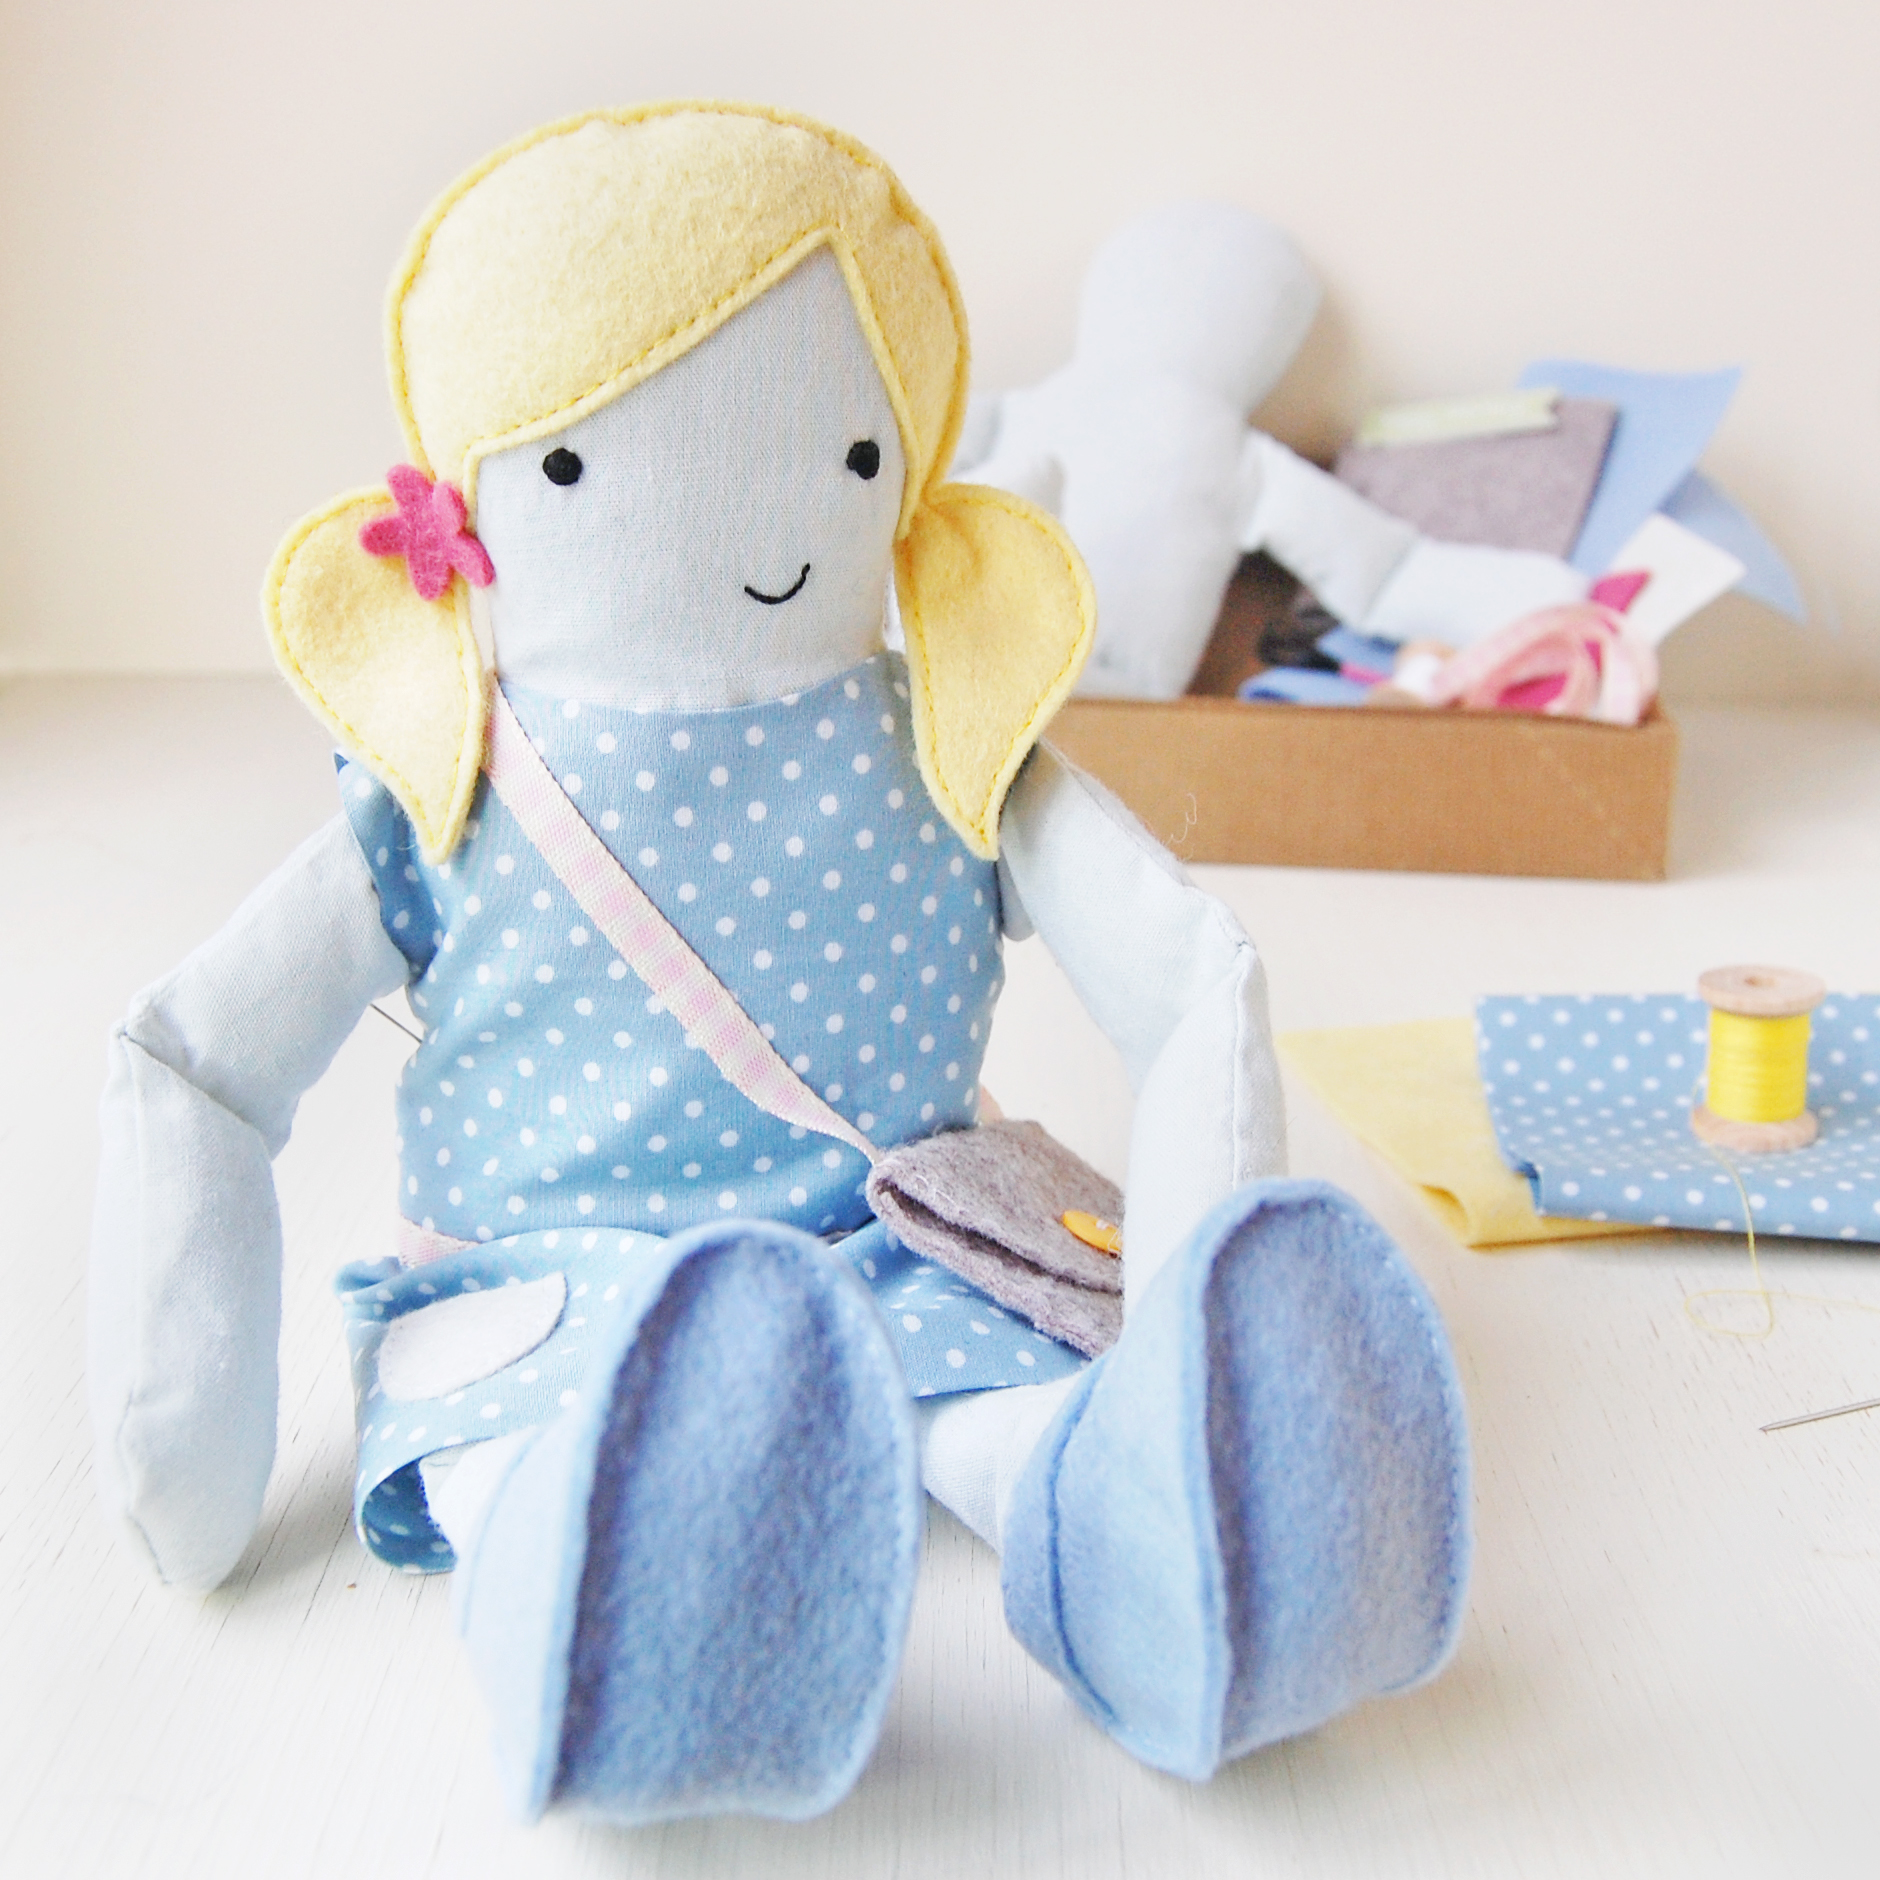 Blue Make Your Own Doll Kit